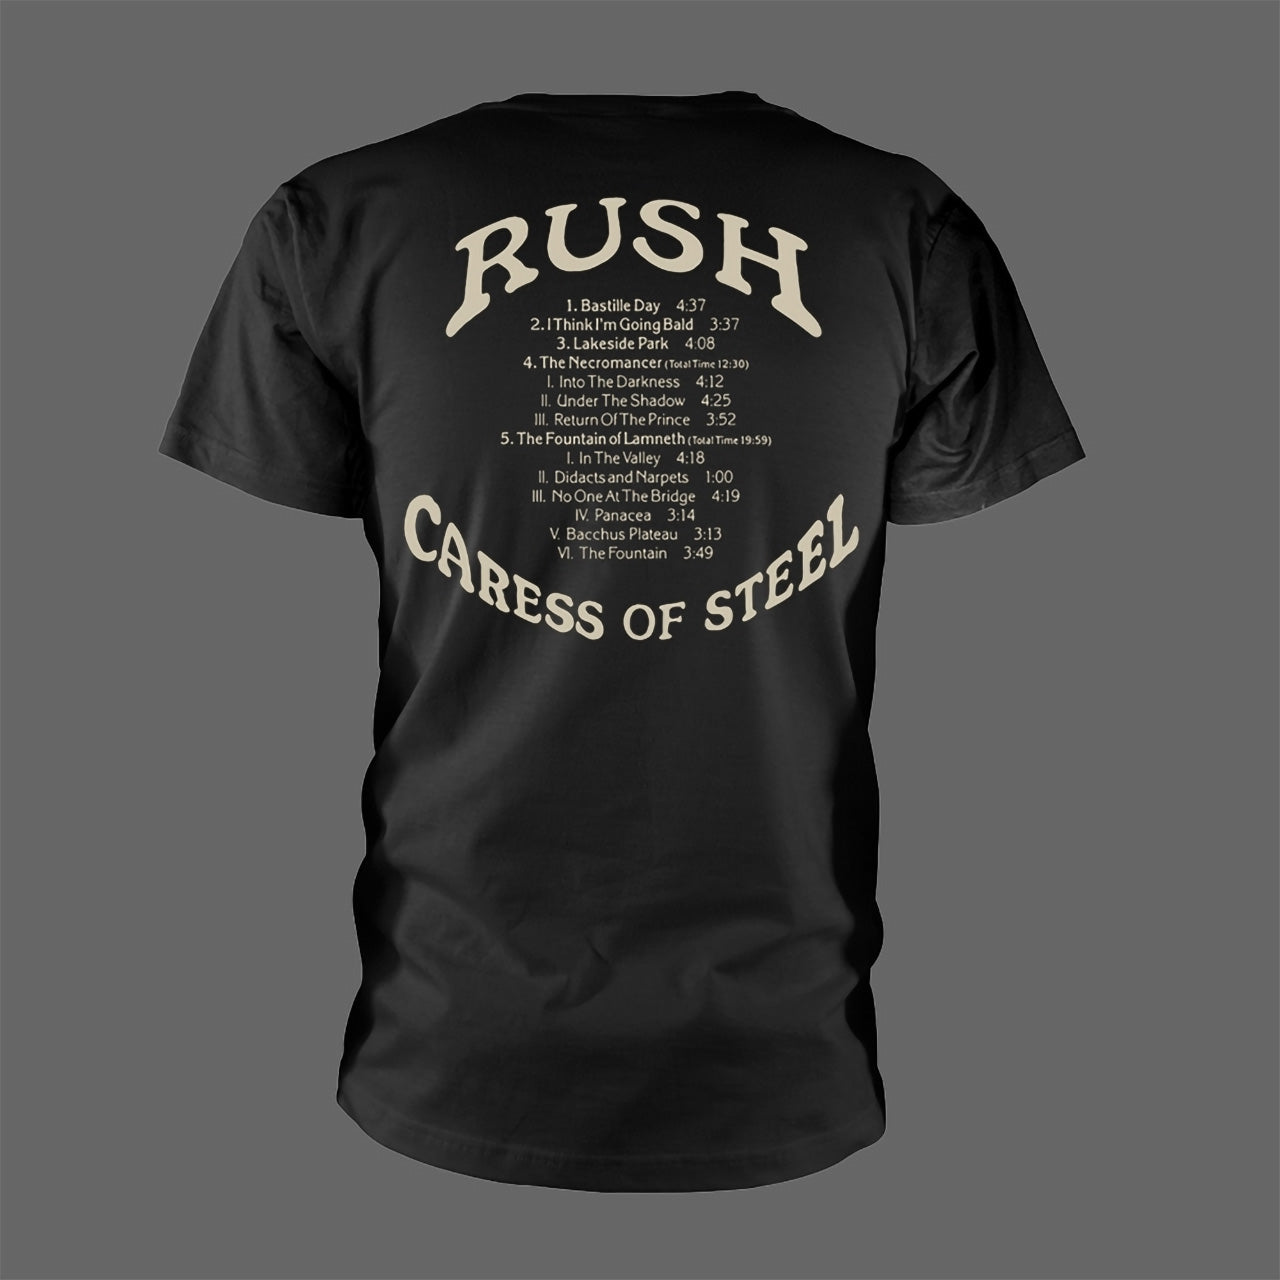 Rush - Caress of Steel (T-Shirt)